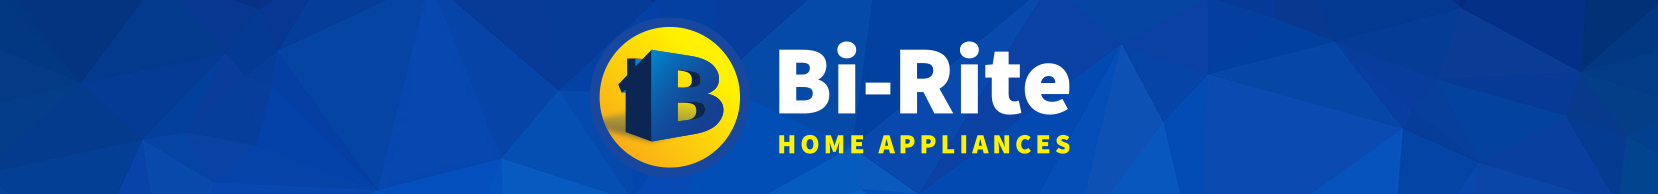 Bi-Rite Home Appliances